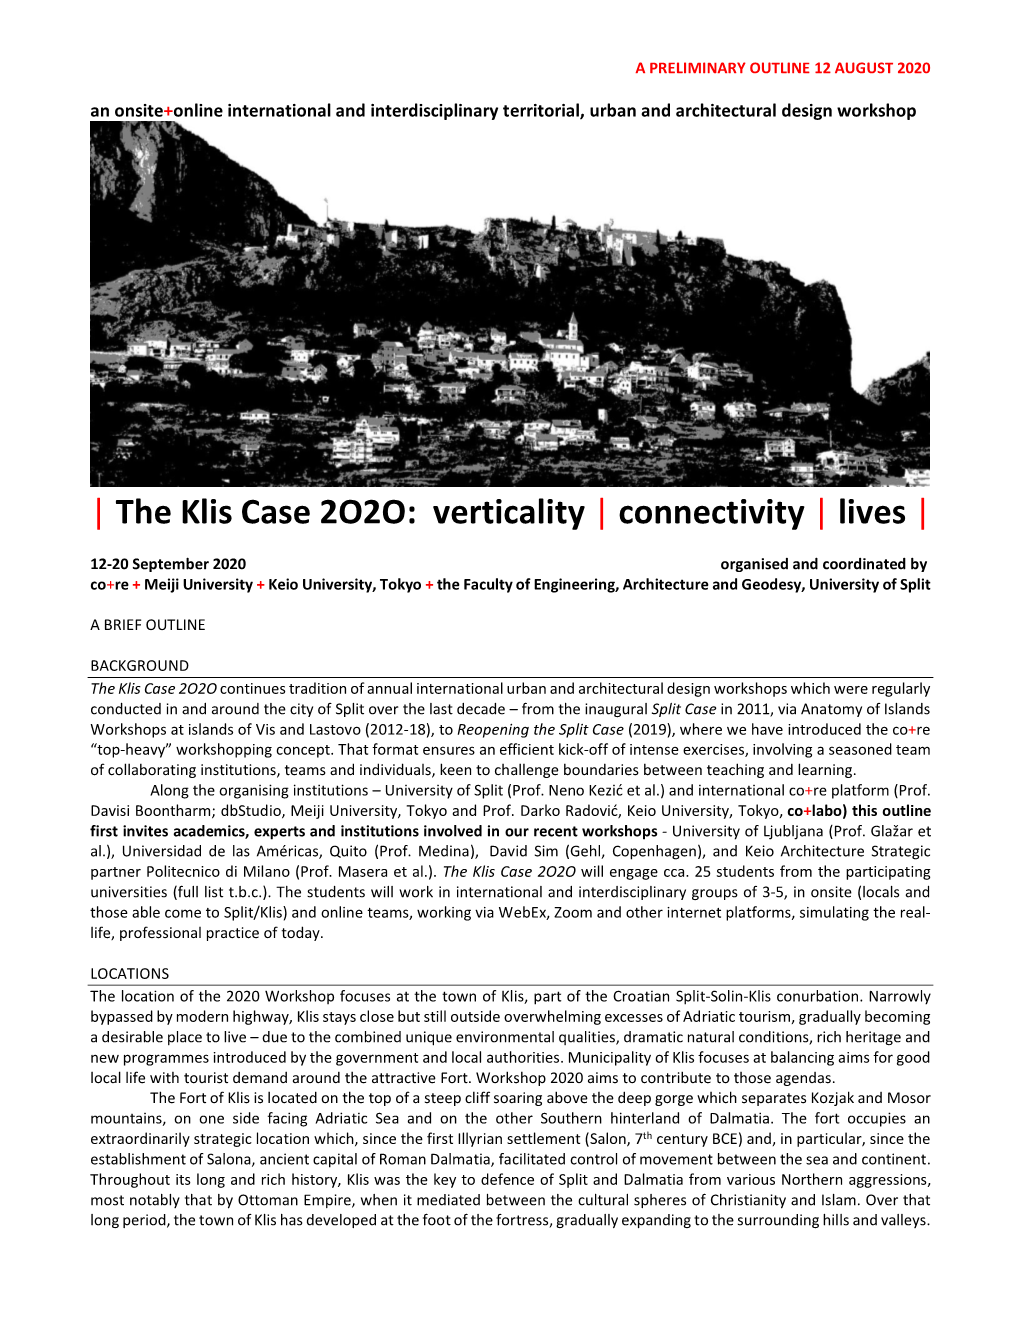 | the Klis Case 2O2O: Verticality | Connectivity | Lives |